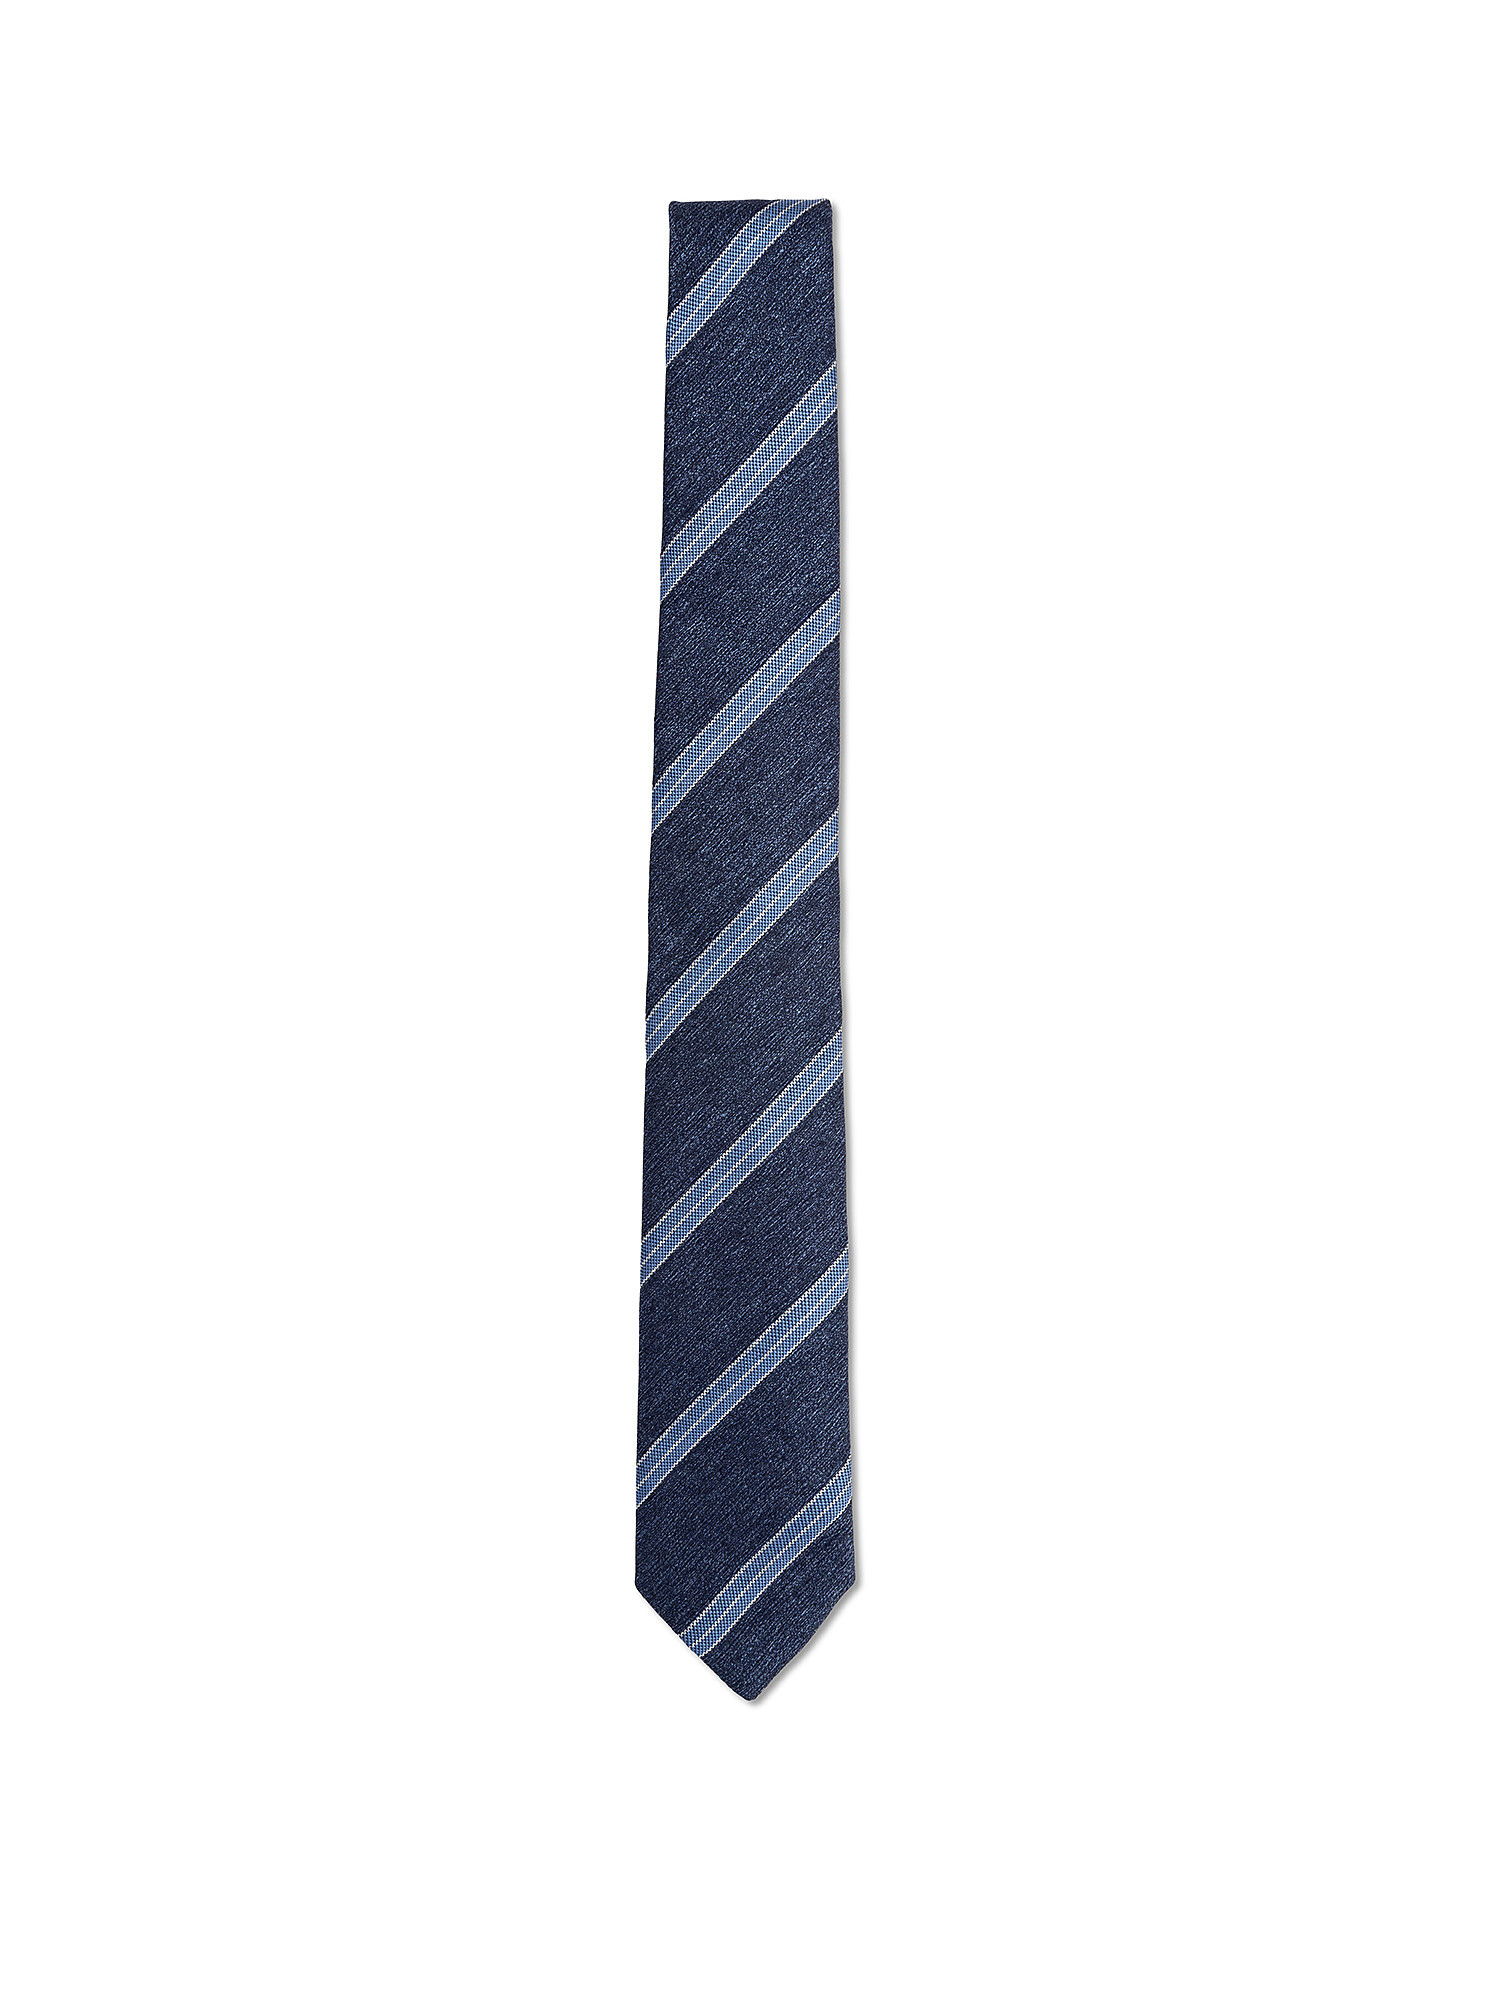 Cravatta in pura seta fantasia, Blu chiaro, large